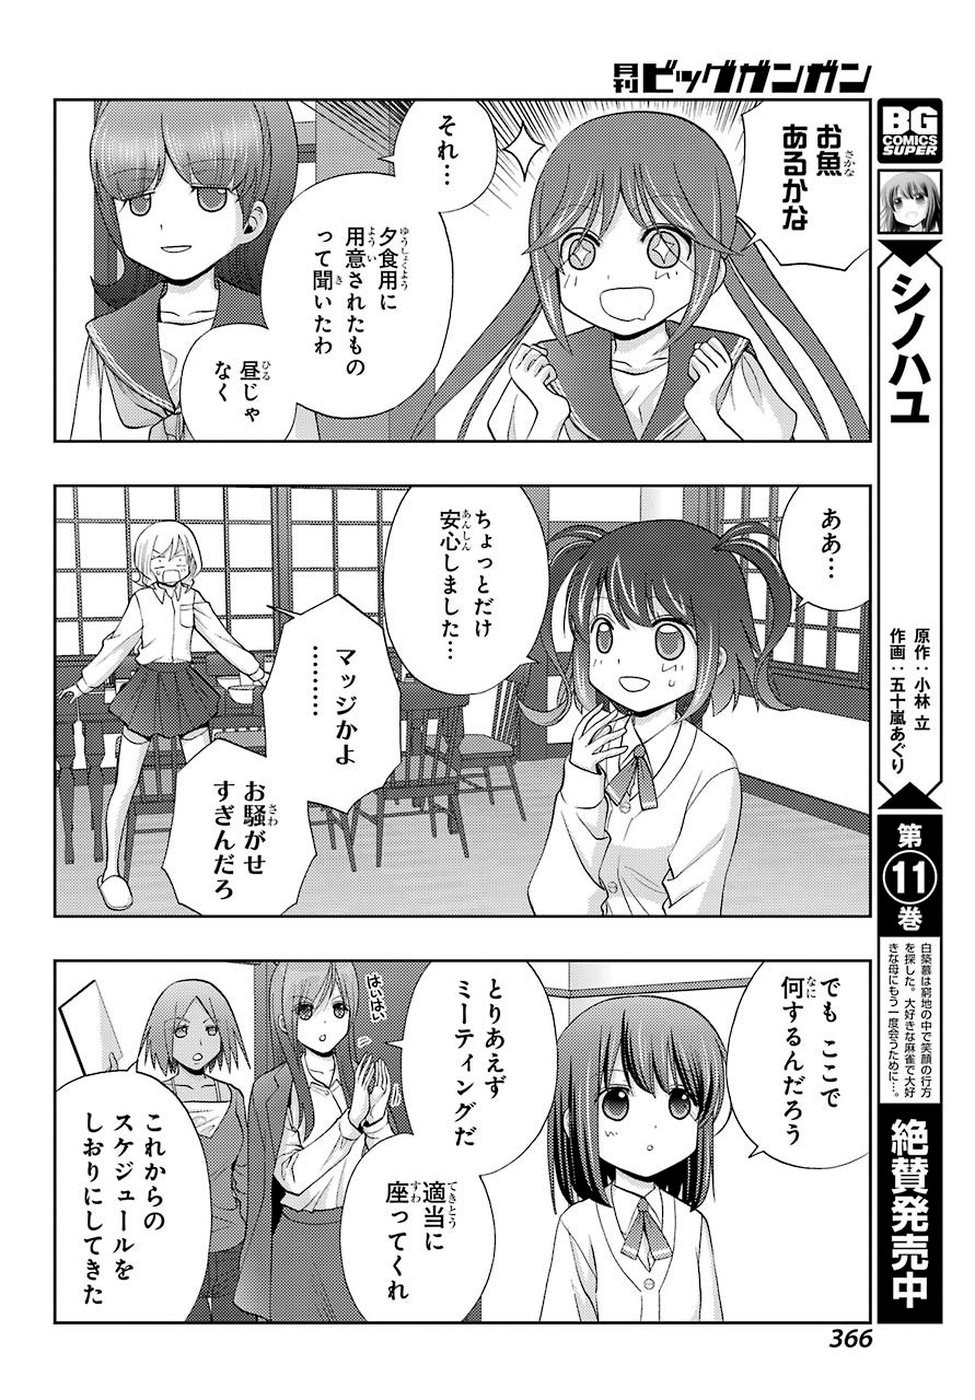 Shinohayu - The Dawn of Age Manga - Chapter 074 - Page 4